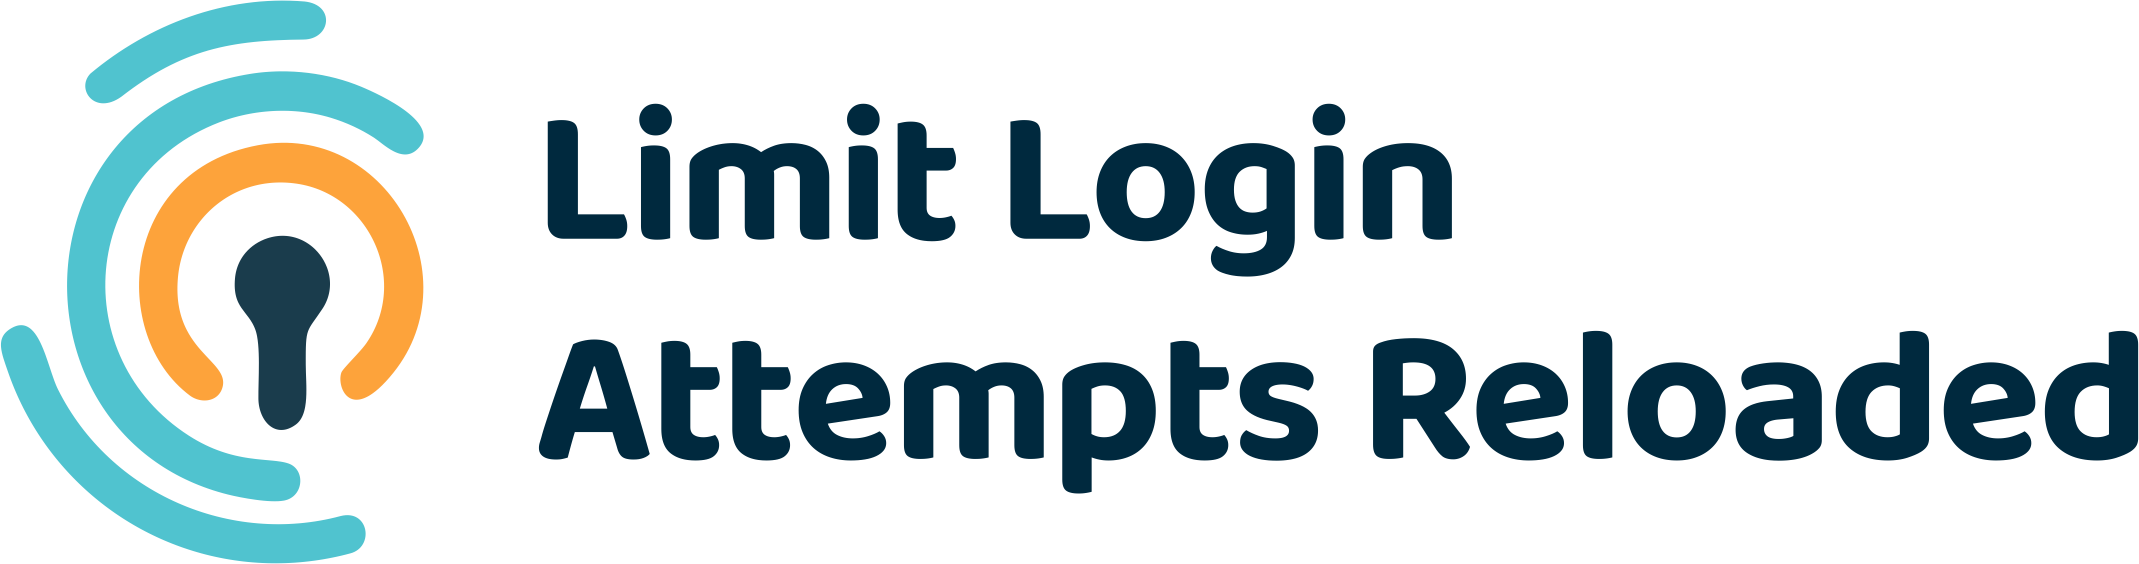 Limit login attempts reloaded logo. 